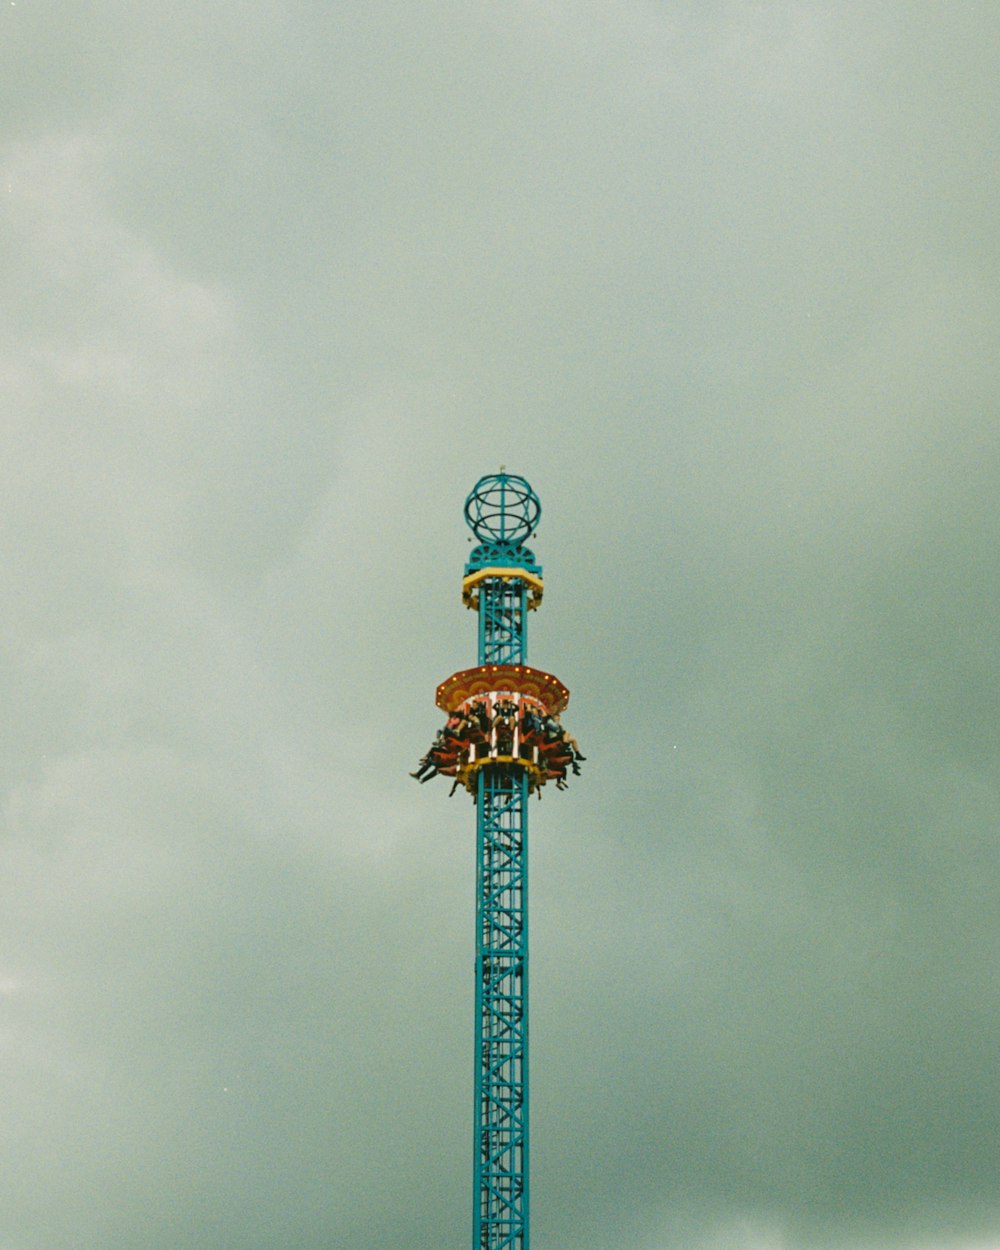 people riding tower amusement park ride